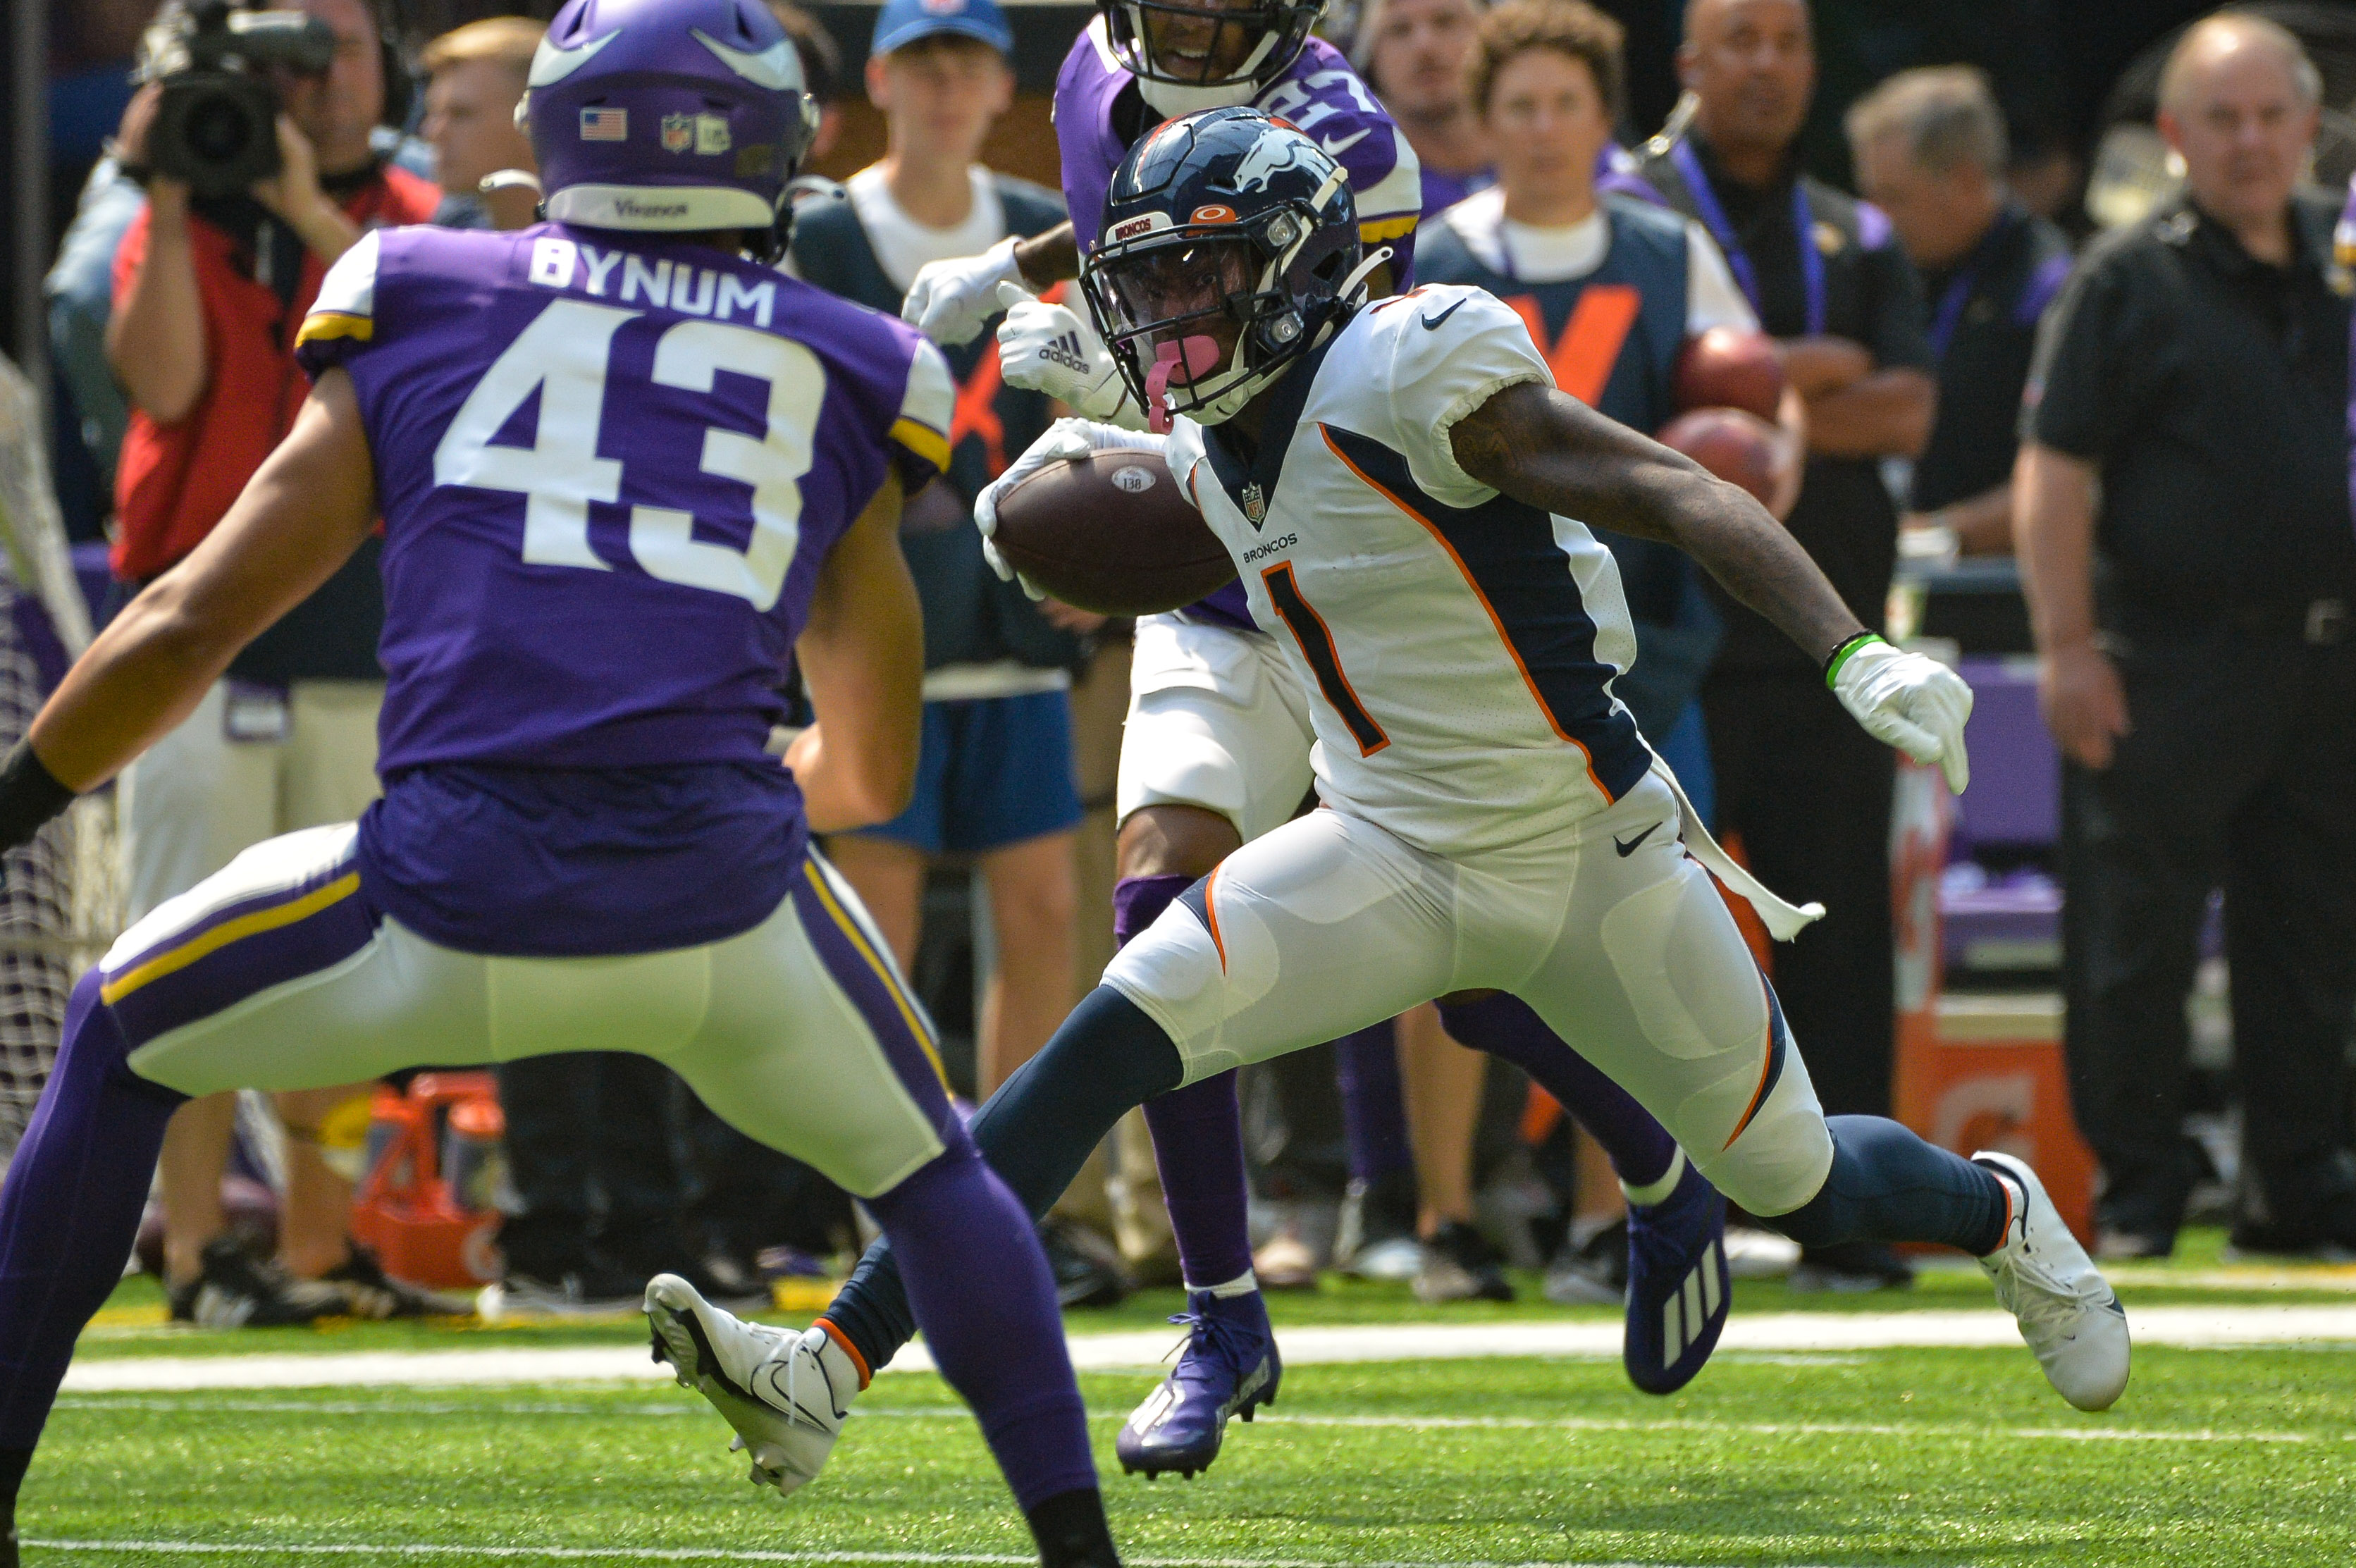 Denver Broncos wide receiver K.J. Hamler (1) runs the ball as Minnesota Vikings cornerback Camryn Bynum (43) defends during the first quarter at U.S. Bank Stadium.